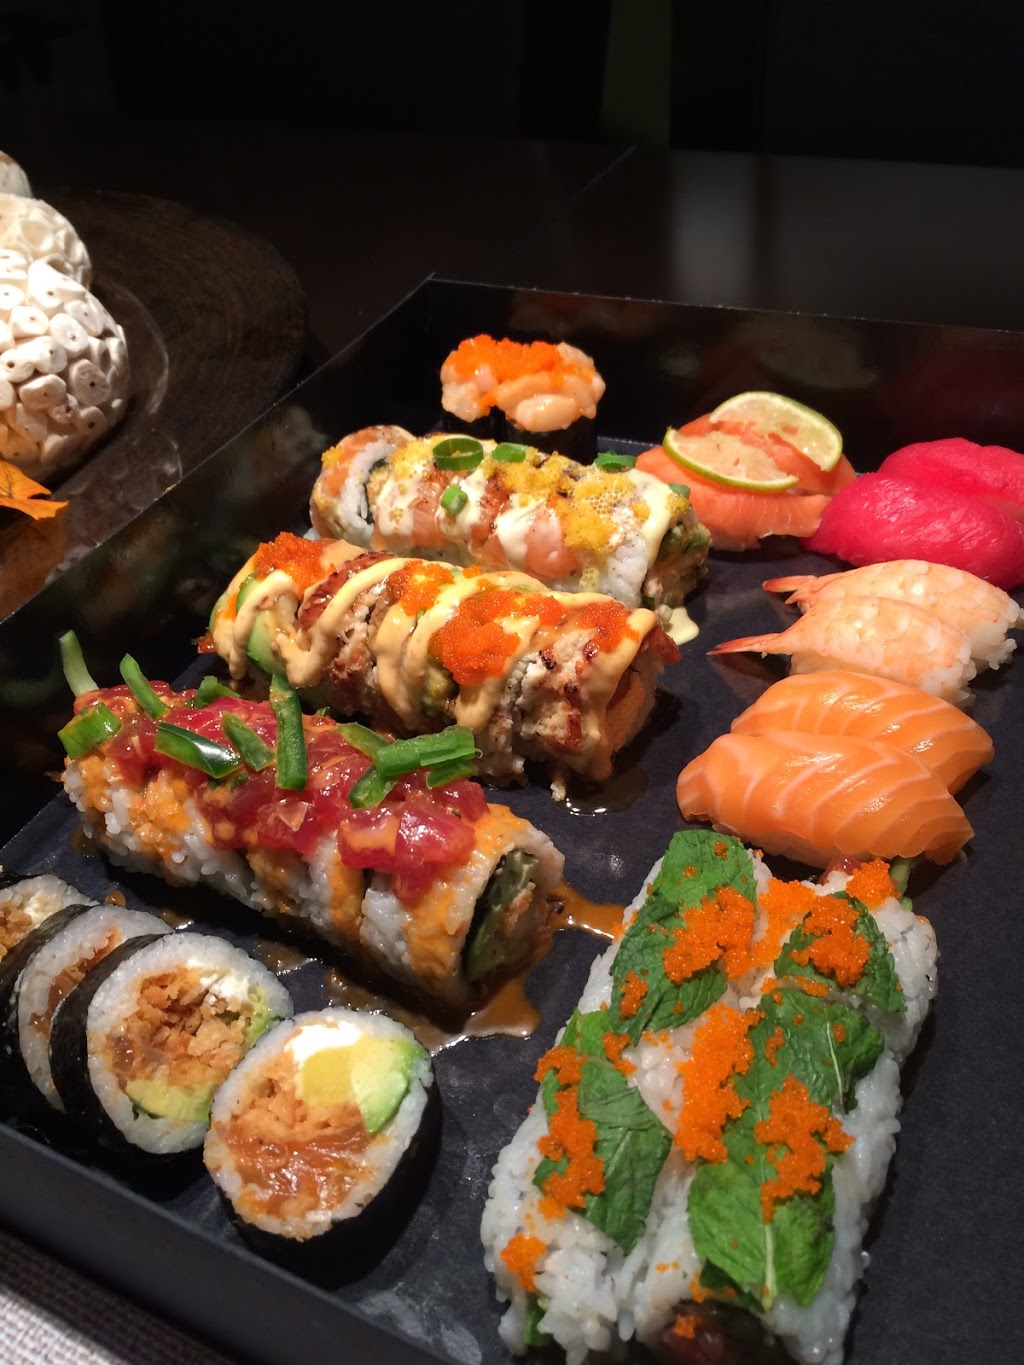 Yuzu sushi | 250 Rue Antoine-Fortier, Québec, QC G1C 0G6, Canada | Phone: (418) 666-5444